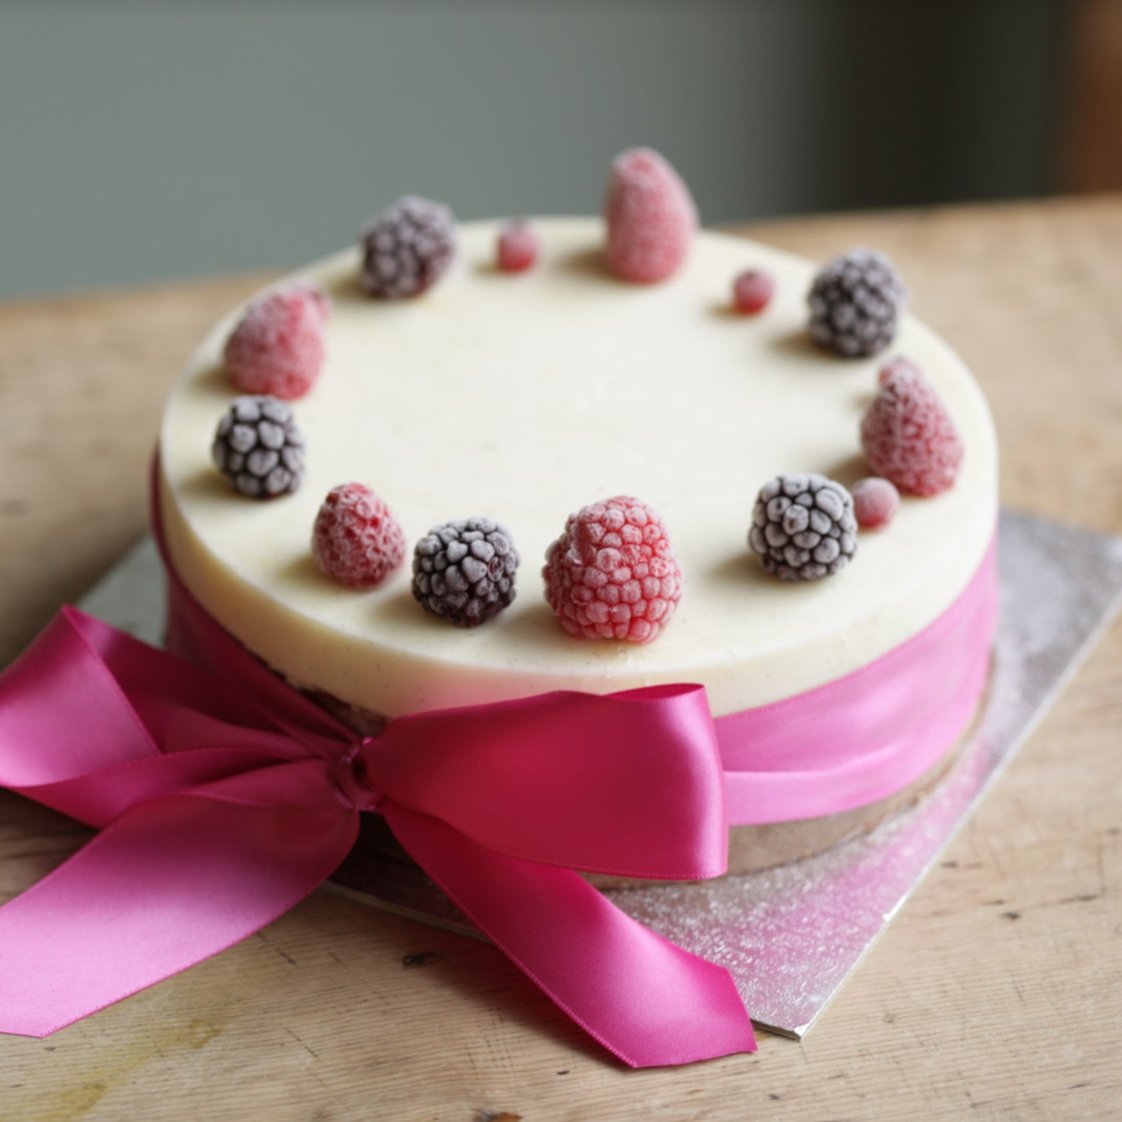 Genoese Sponge Cake Layer - Ruby Violet Ice Cream & Sorbet